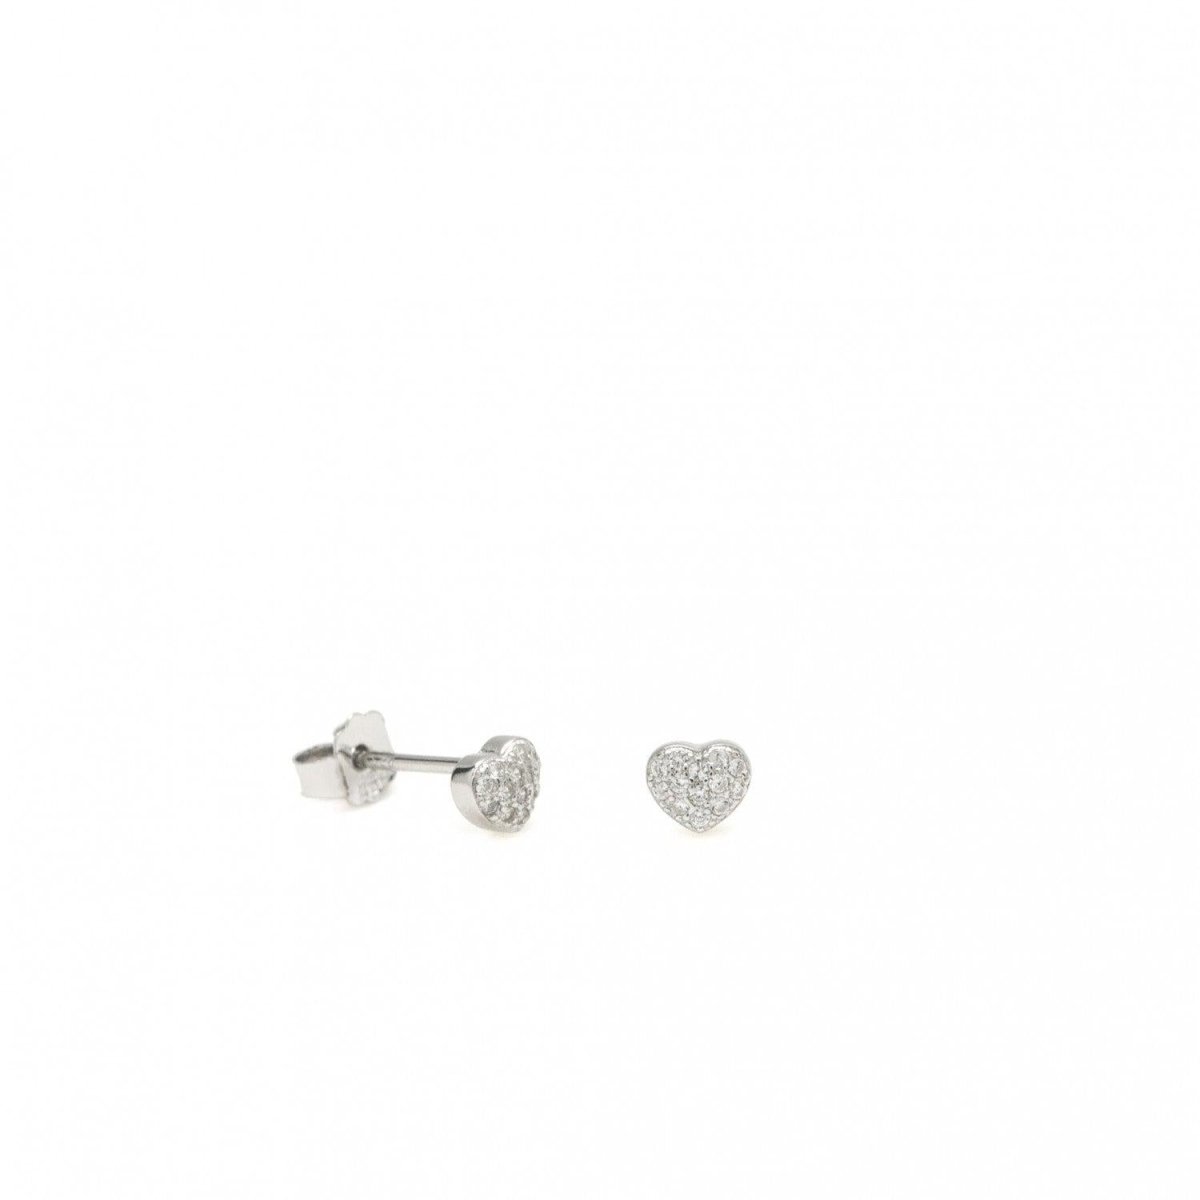 Earrings - Small earrings with heart motif and zircons